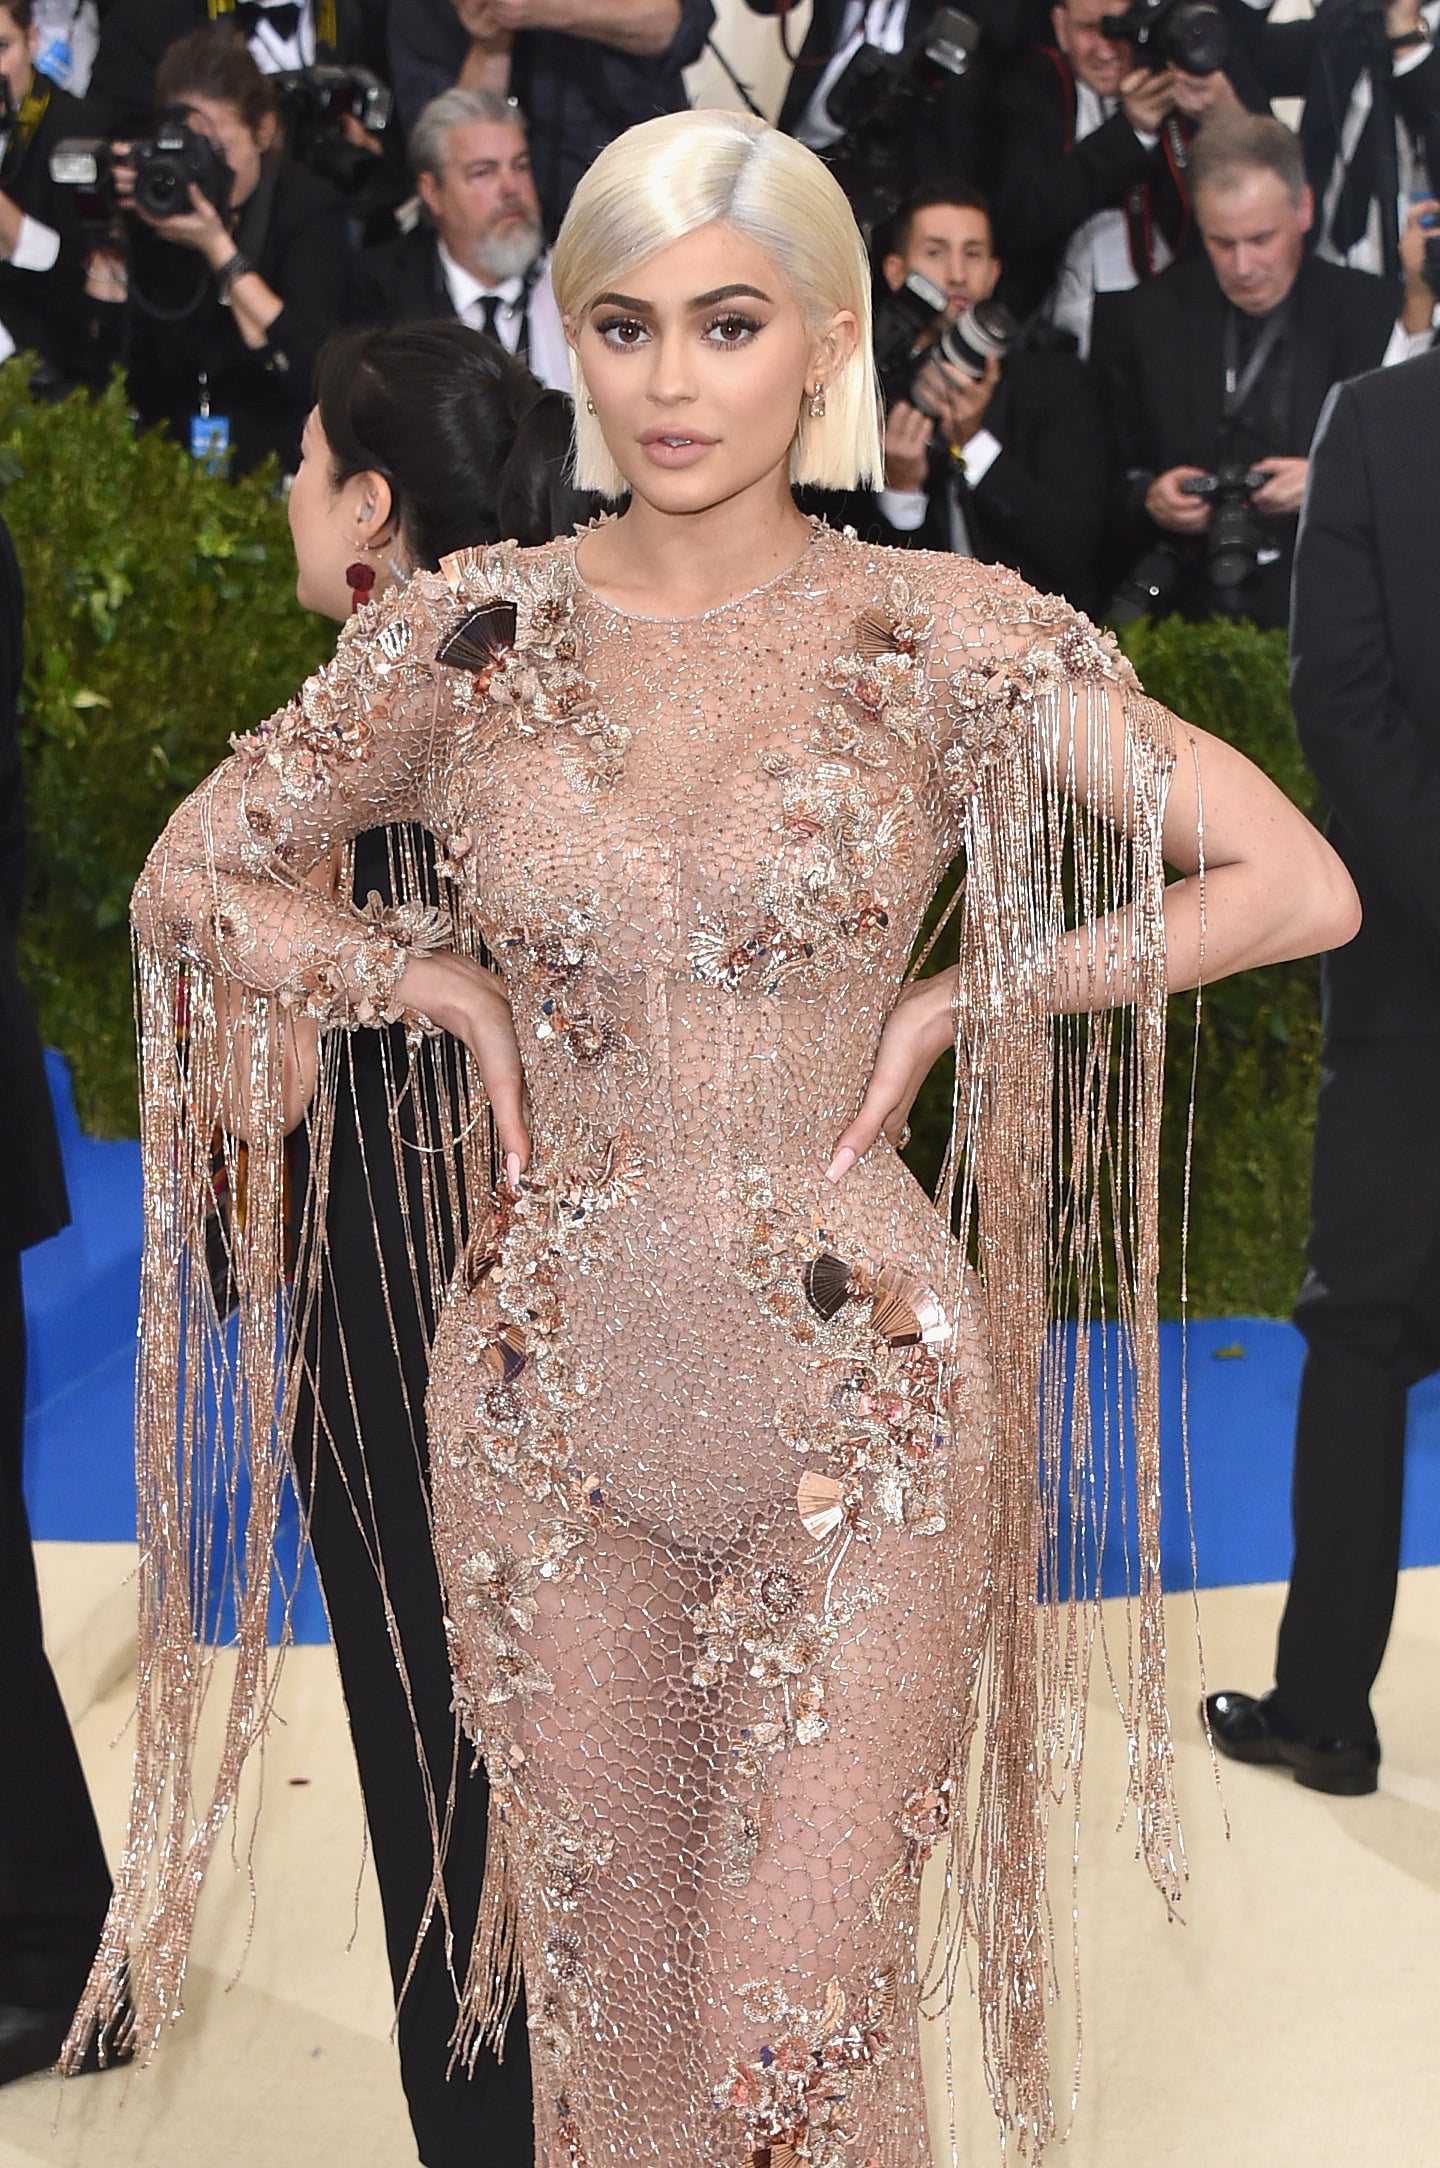 Kylie Jenner in Naked Versace Dress at Met Gala 2017 - Kylie